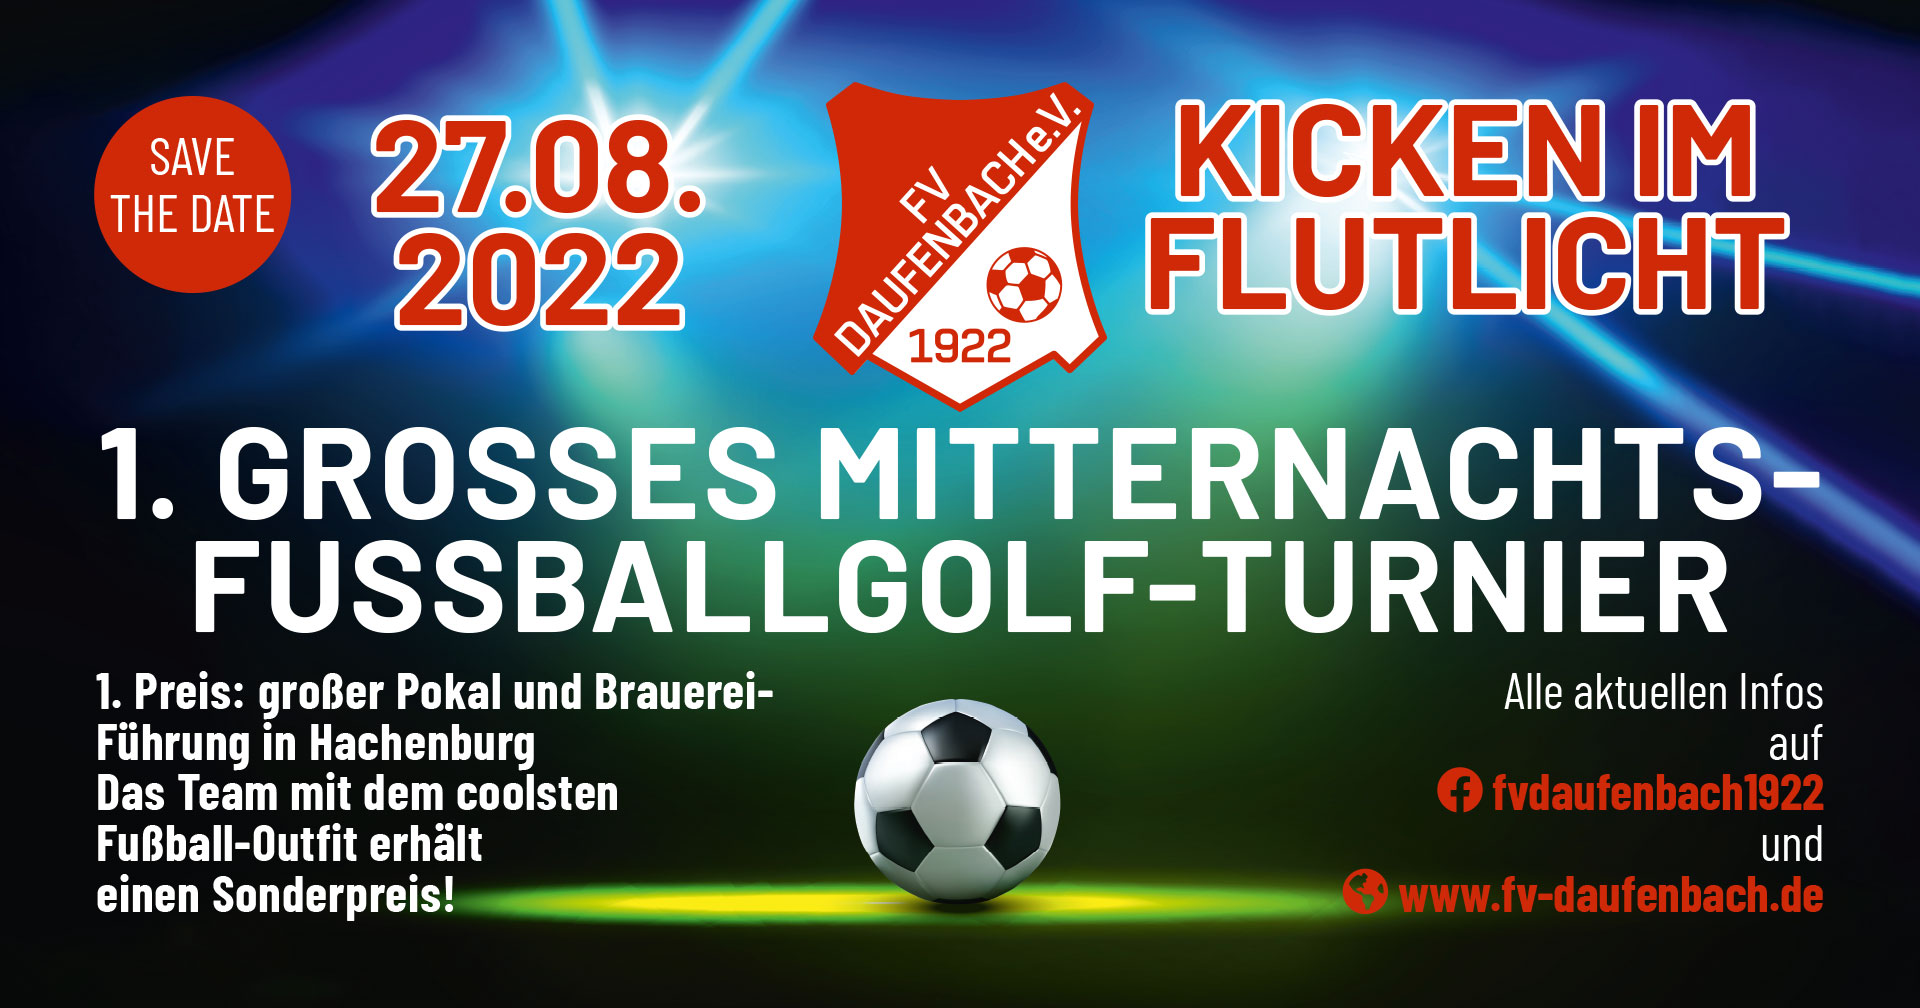 FV 1922 Daufenbach e.V. - Mitternachts-Fußballgolf-Turnier